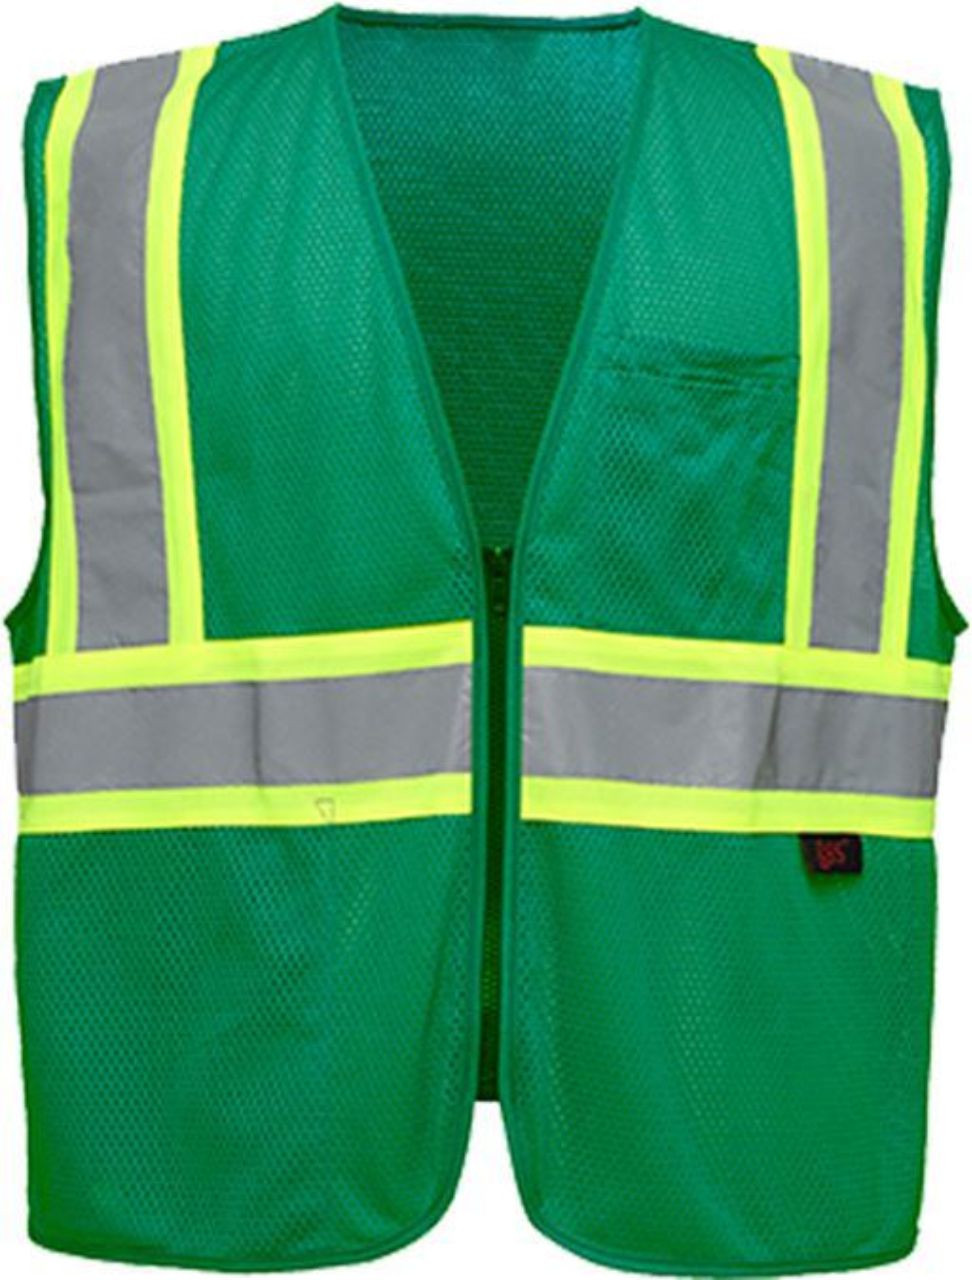 Green Safety Vest | Safety Vest with Trim